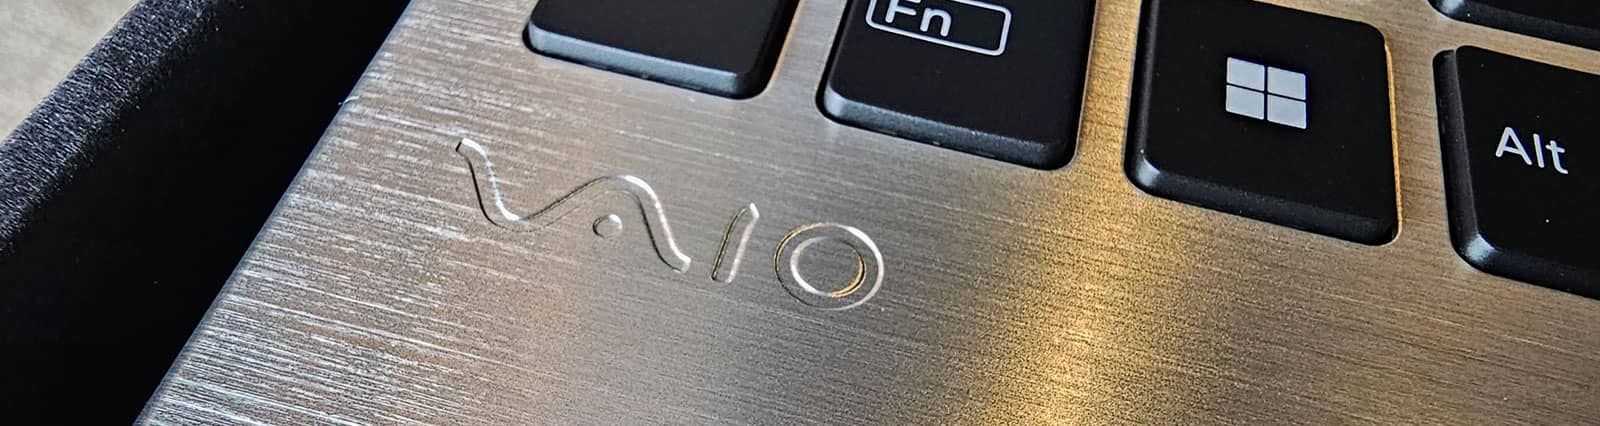 VAIO F16 Laptop Review